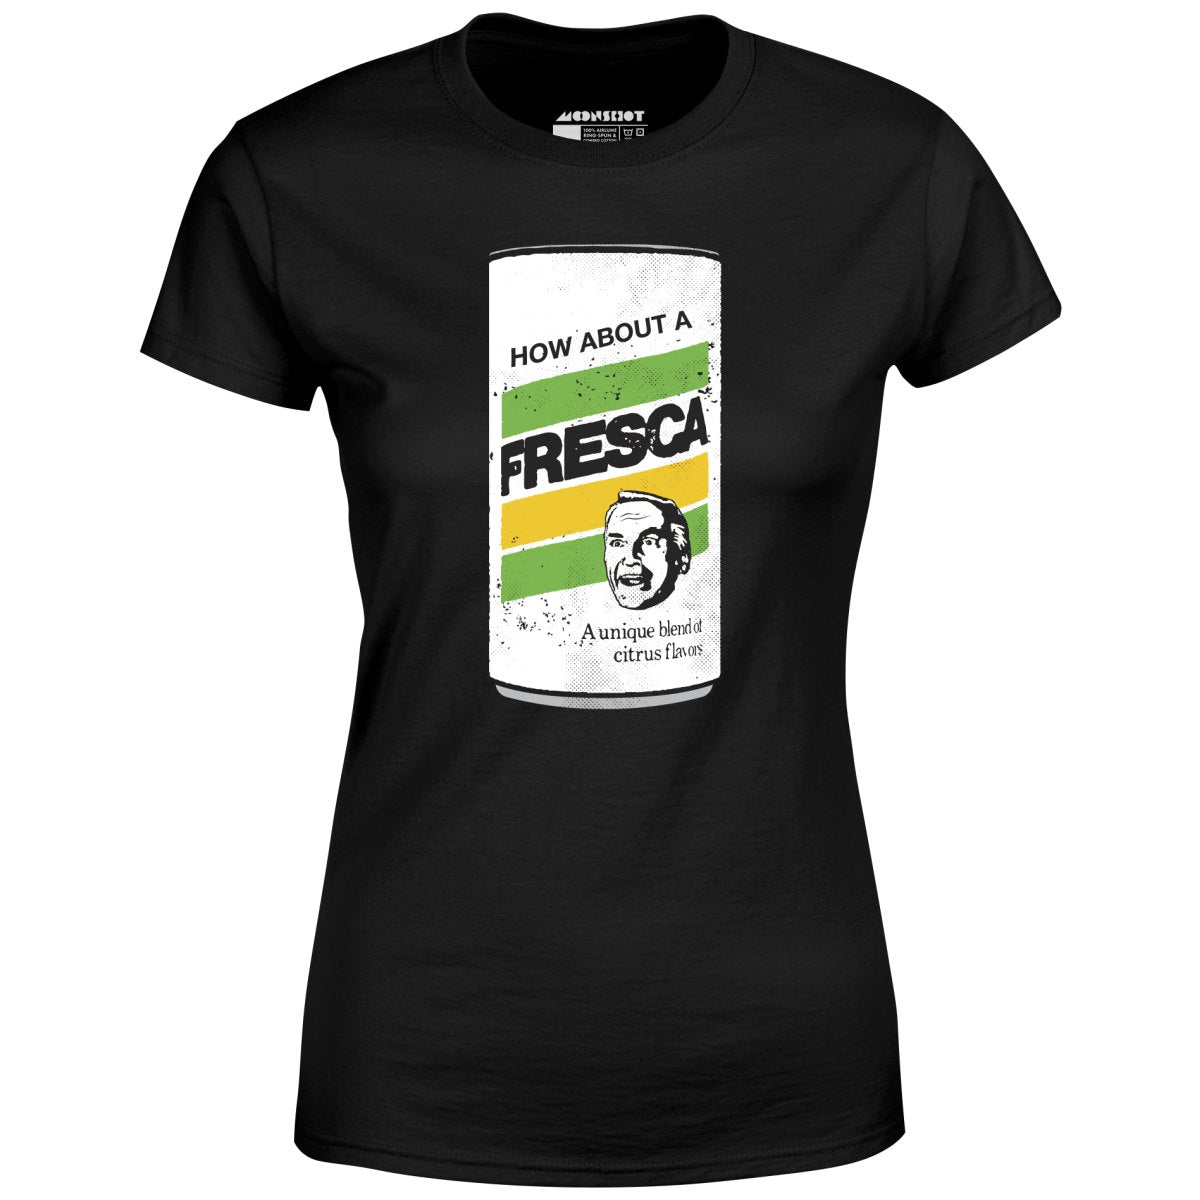 How About a Fresca? - Women's T-Shirt